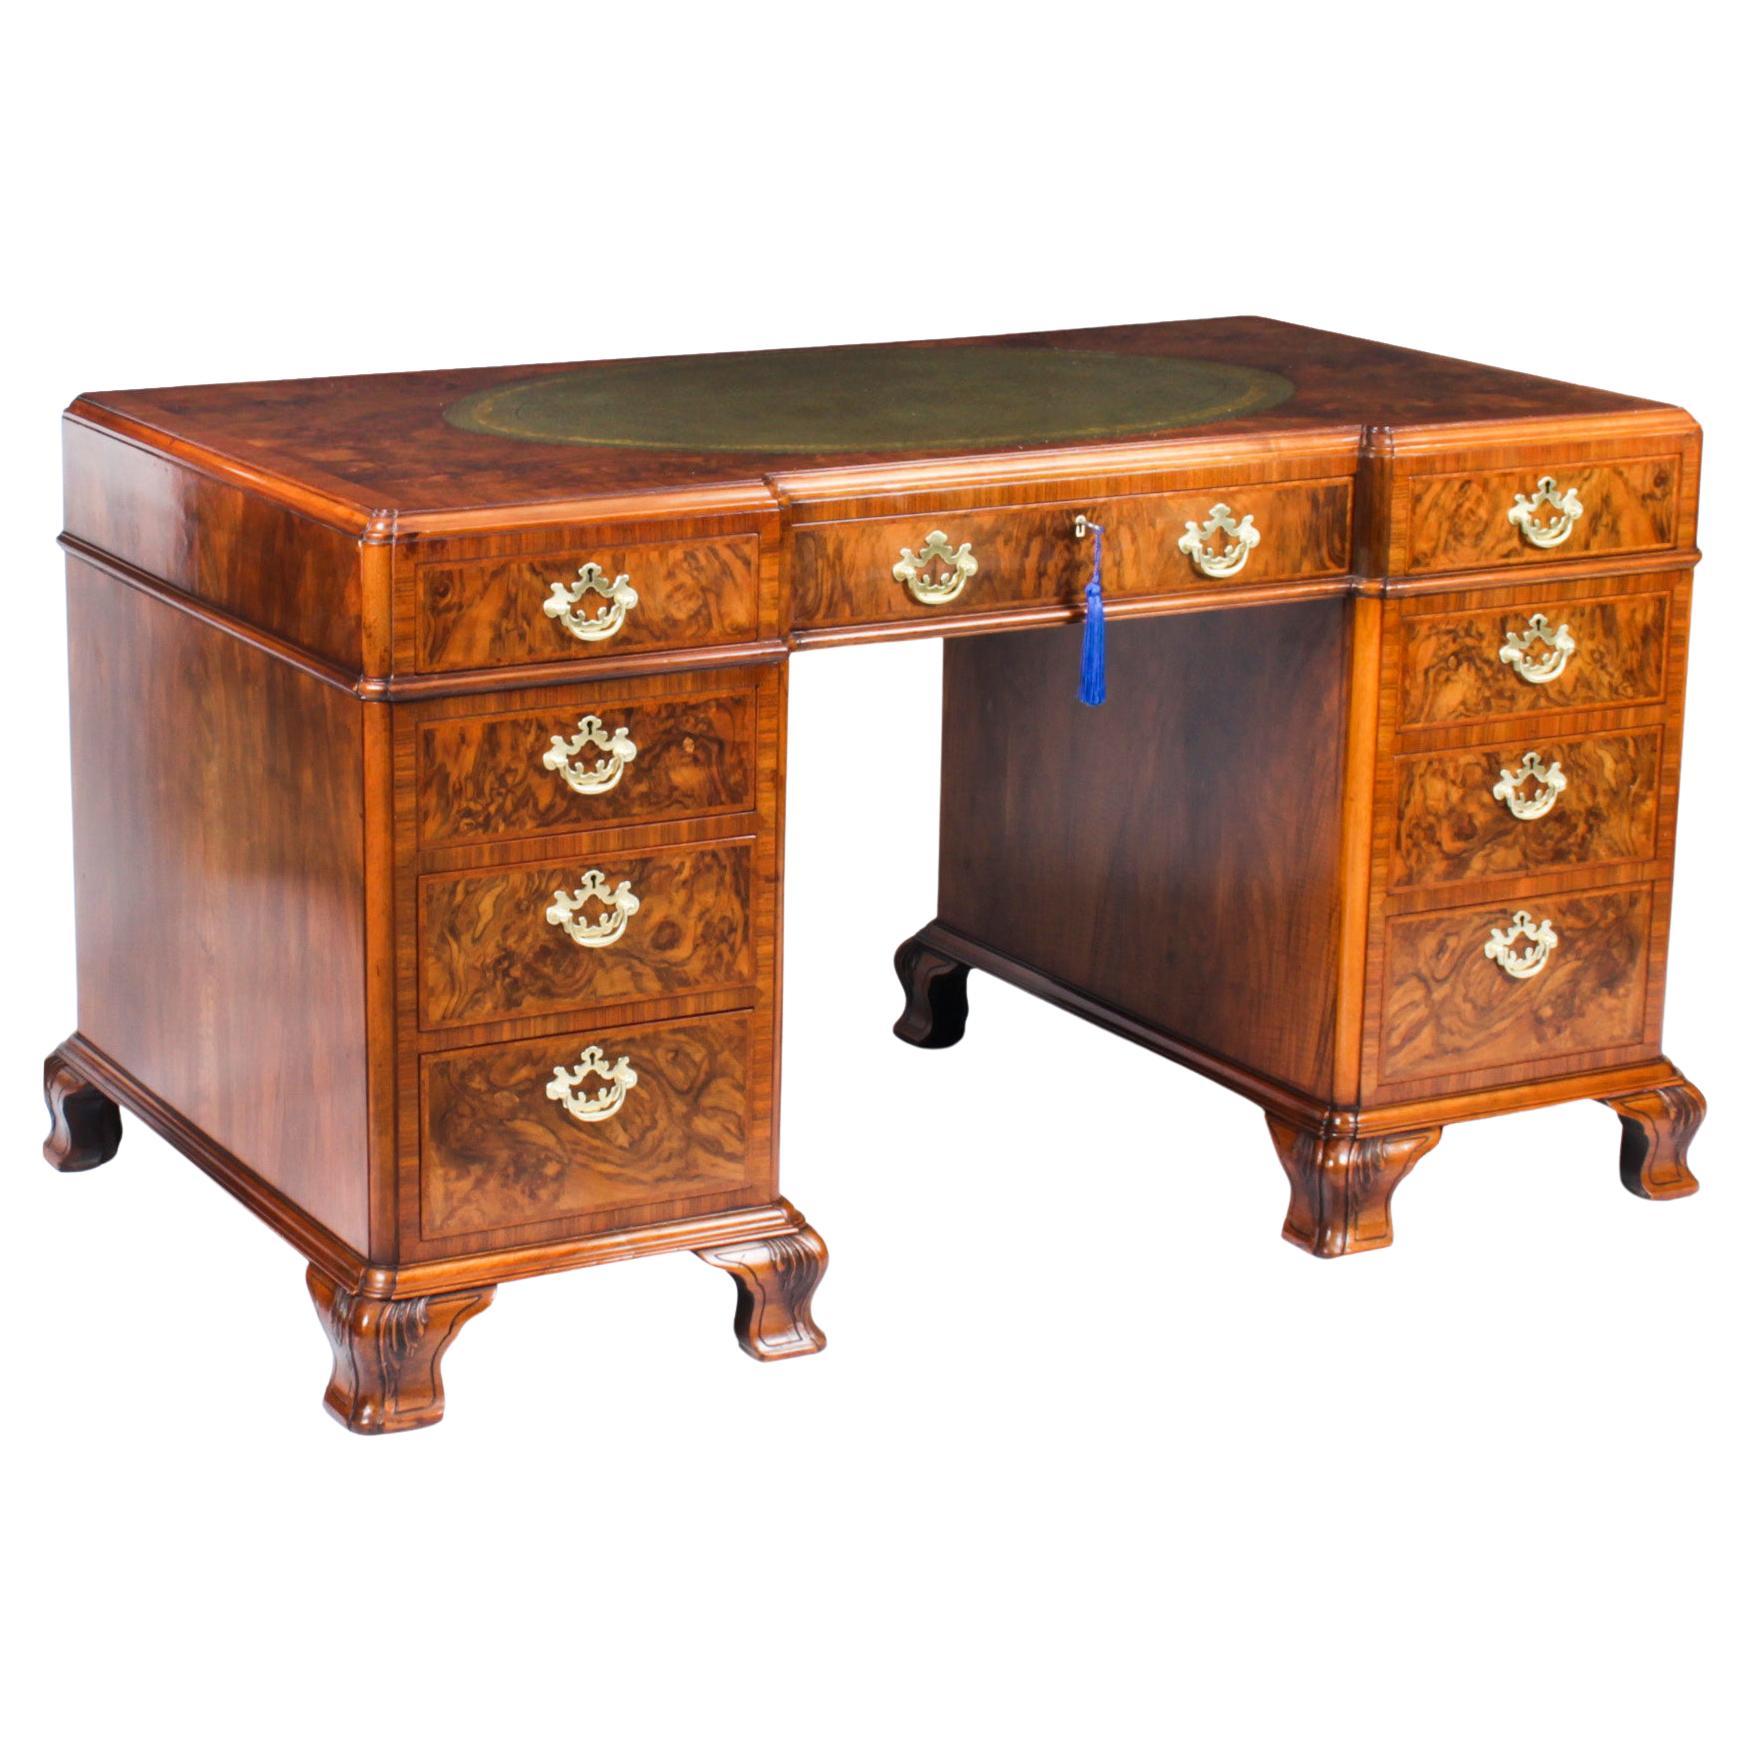 Antique Victorian Revival Burr Walnut Pedestal Desk 20th C